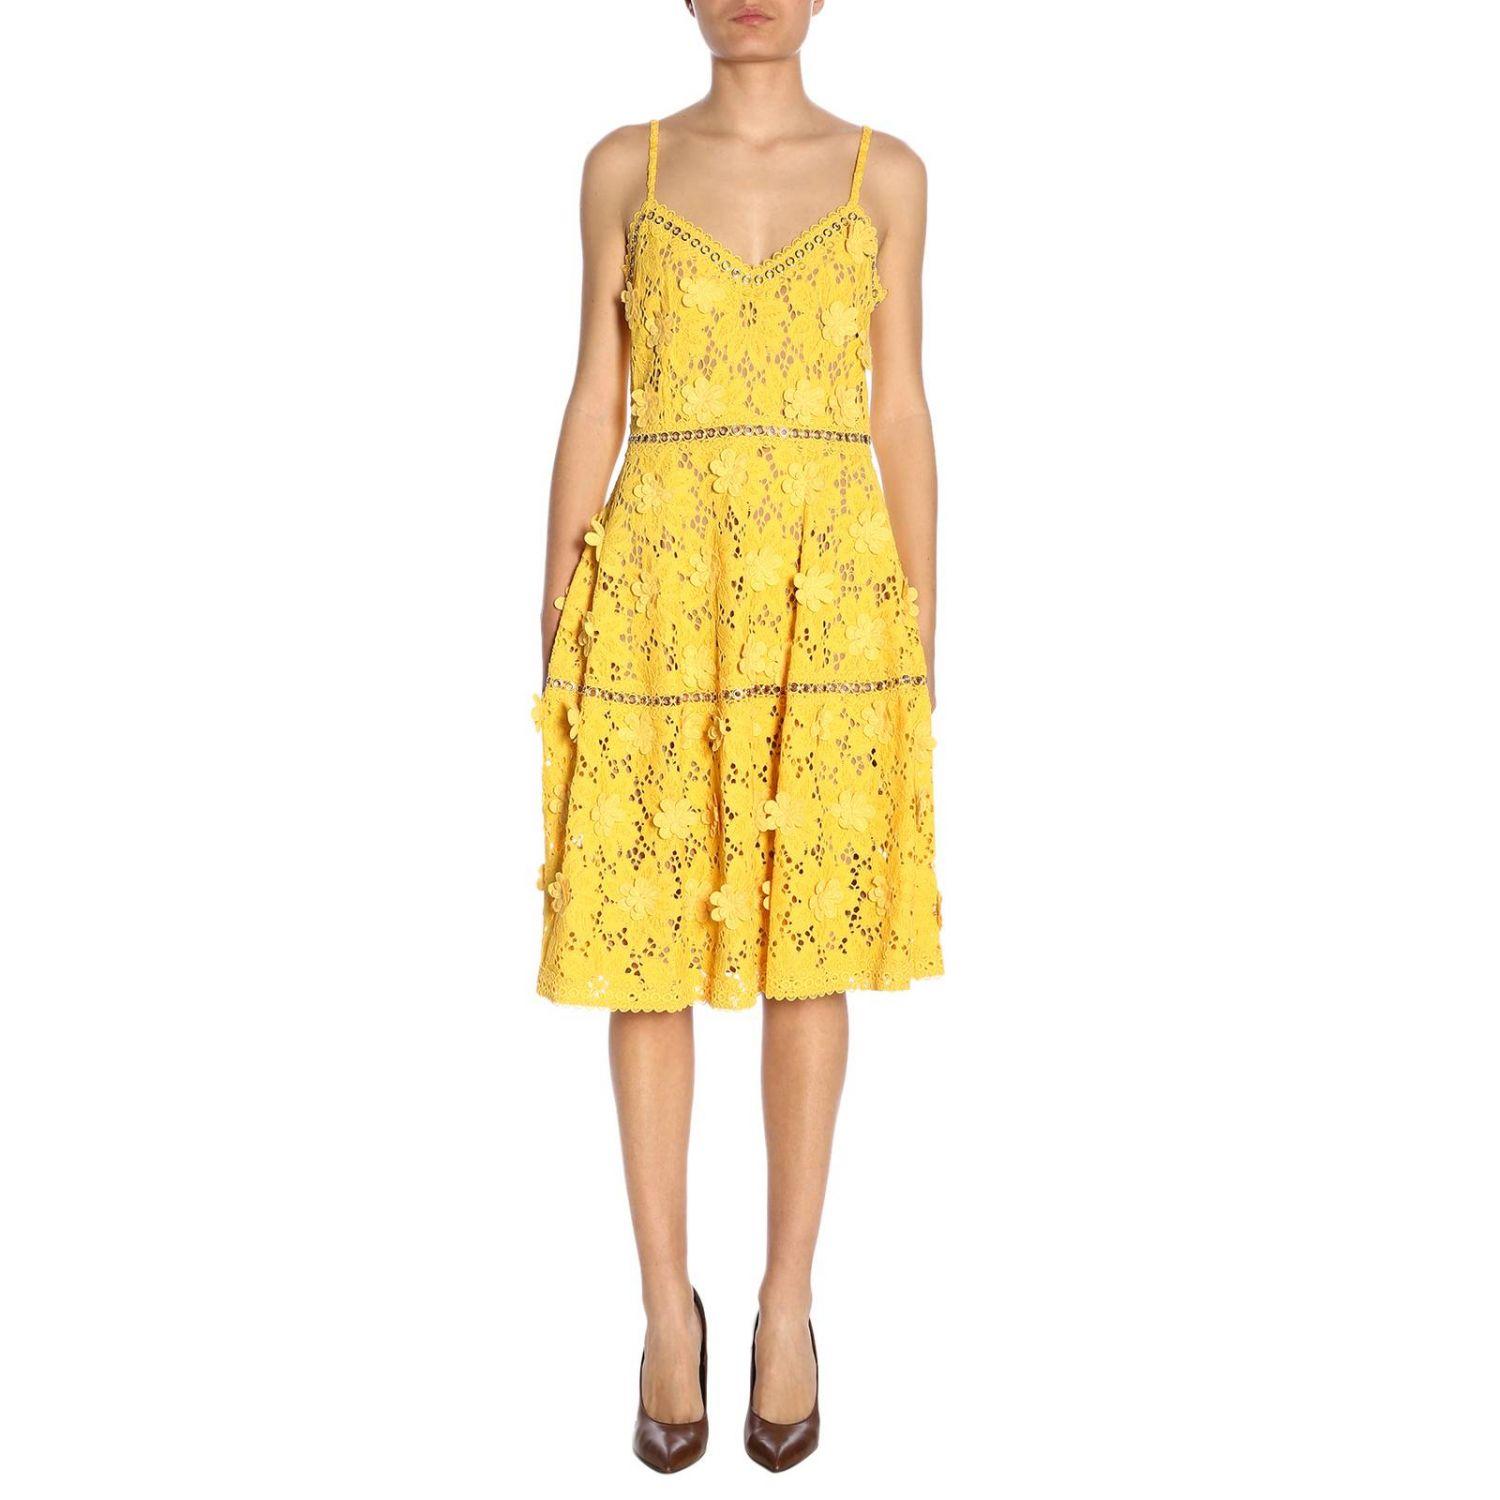 MICHAEL Michael Kors Floral Appliqué Lace Dress in Yellow - Lyst